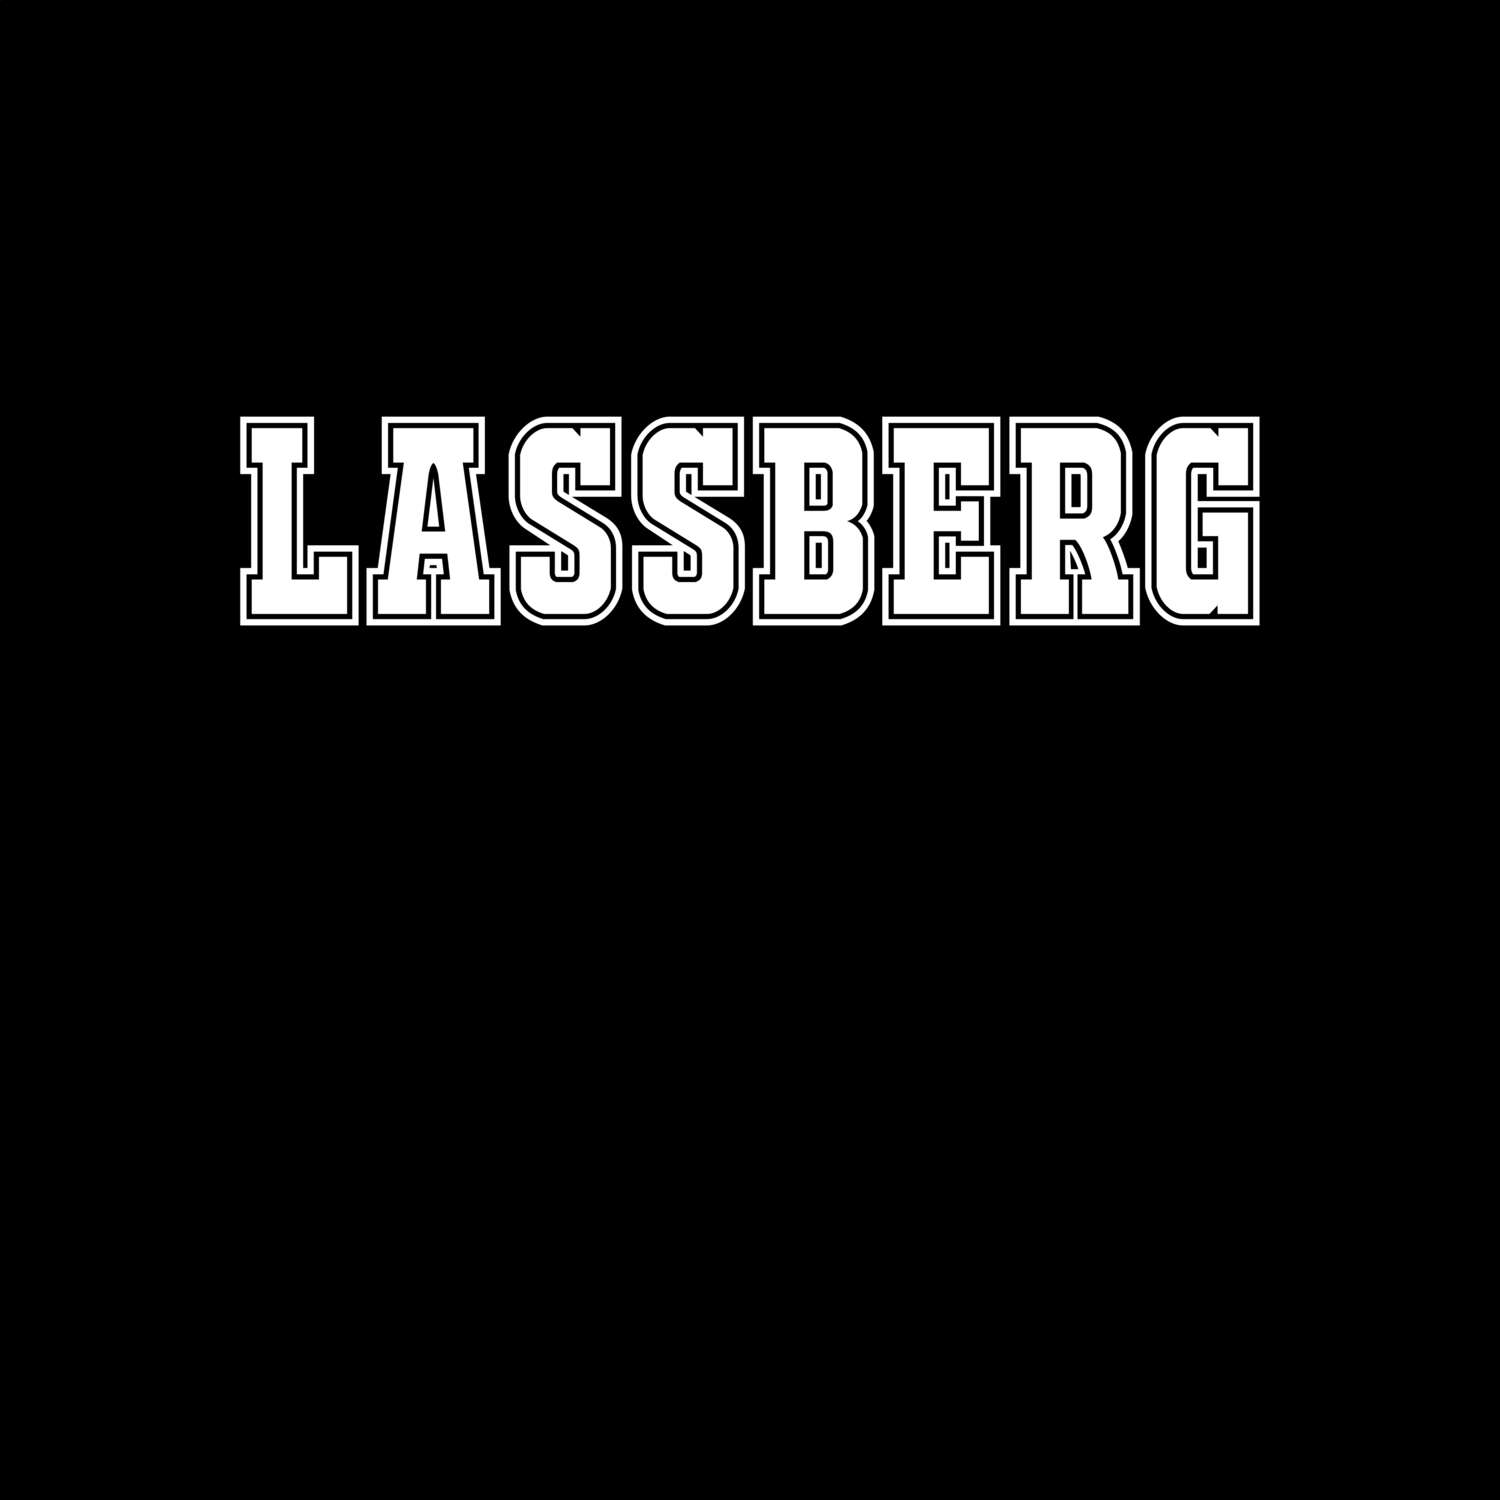 Laßberg T-Shirt »Classic«